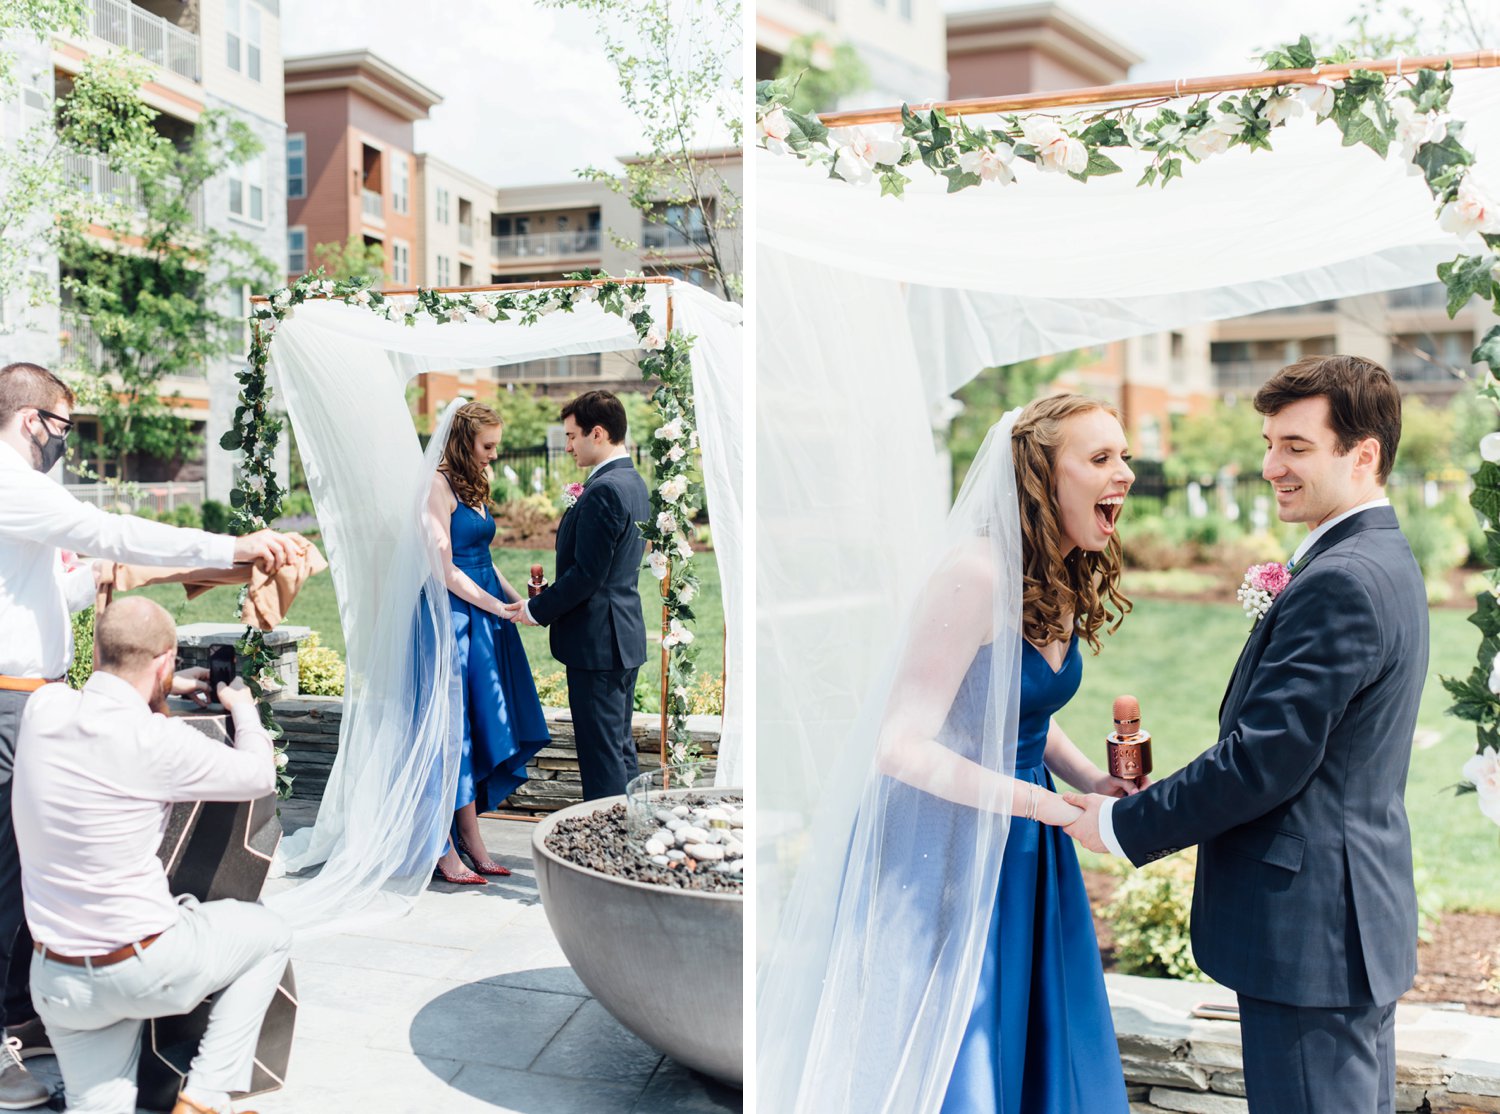 Anna + Mike - King of Prussia Coronavirus Elopement - Philadelphia Wedding Photographer - Alison Dunn Photography photo